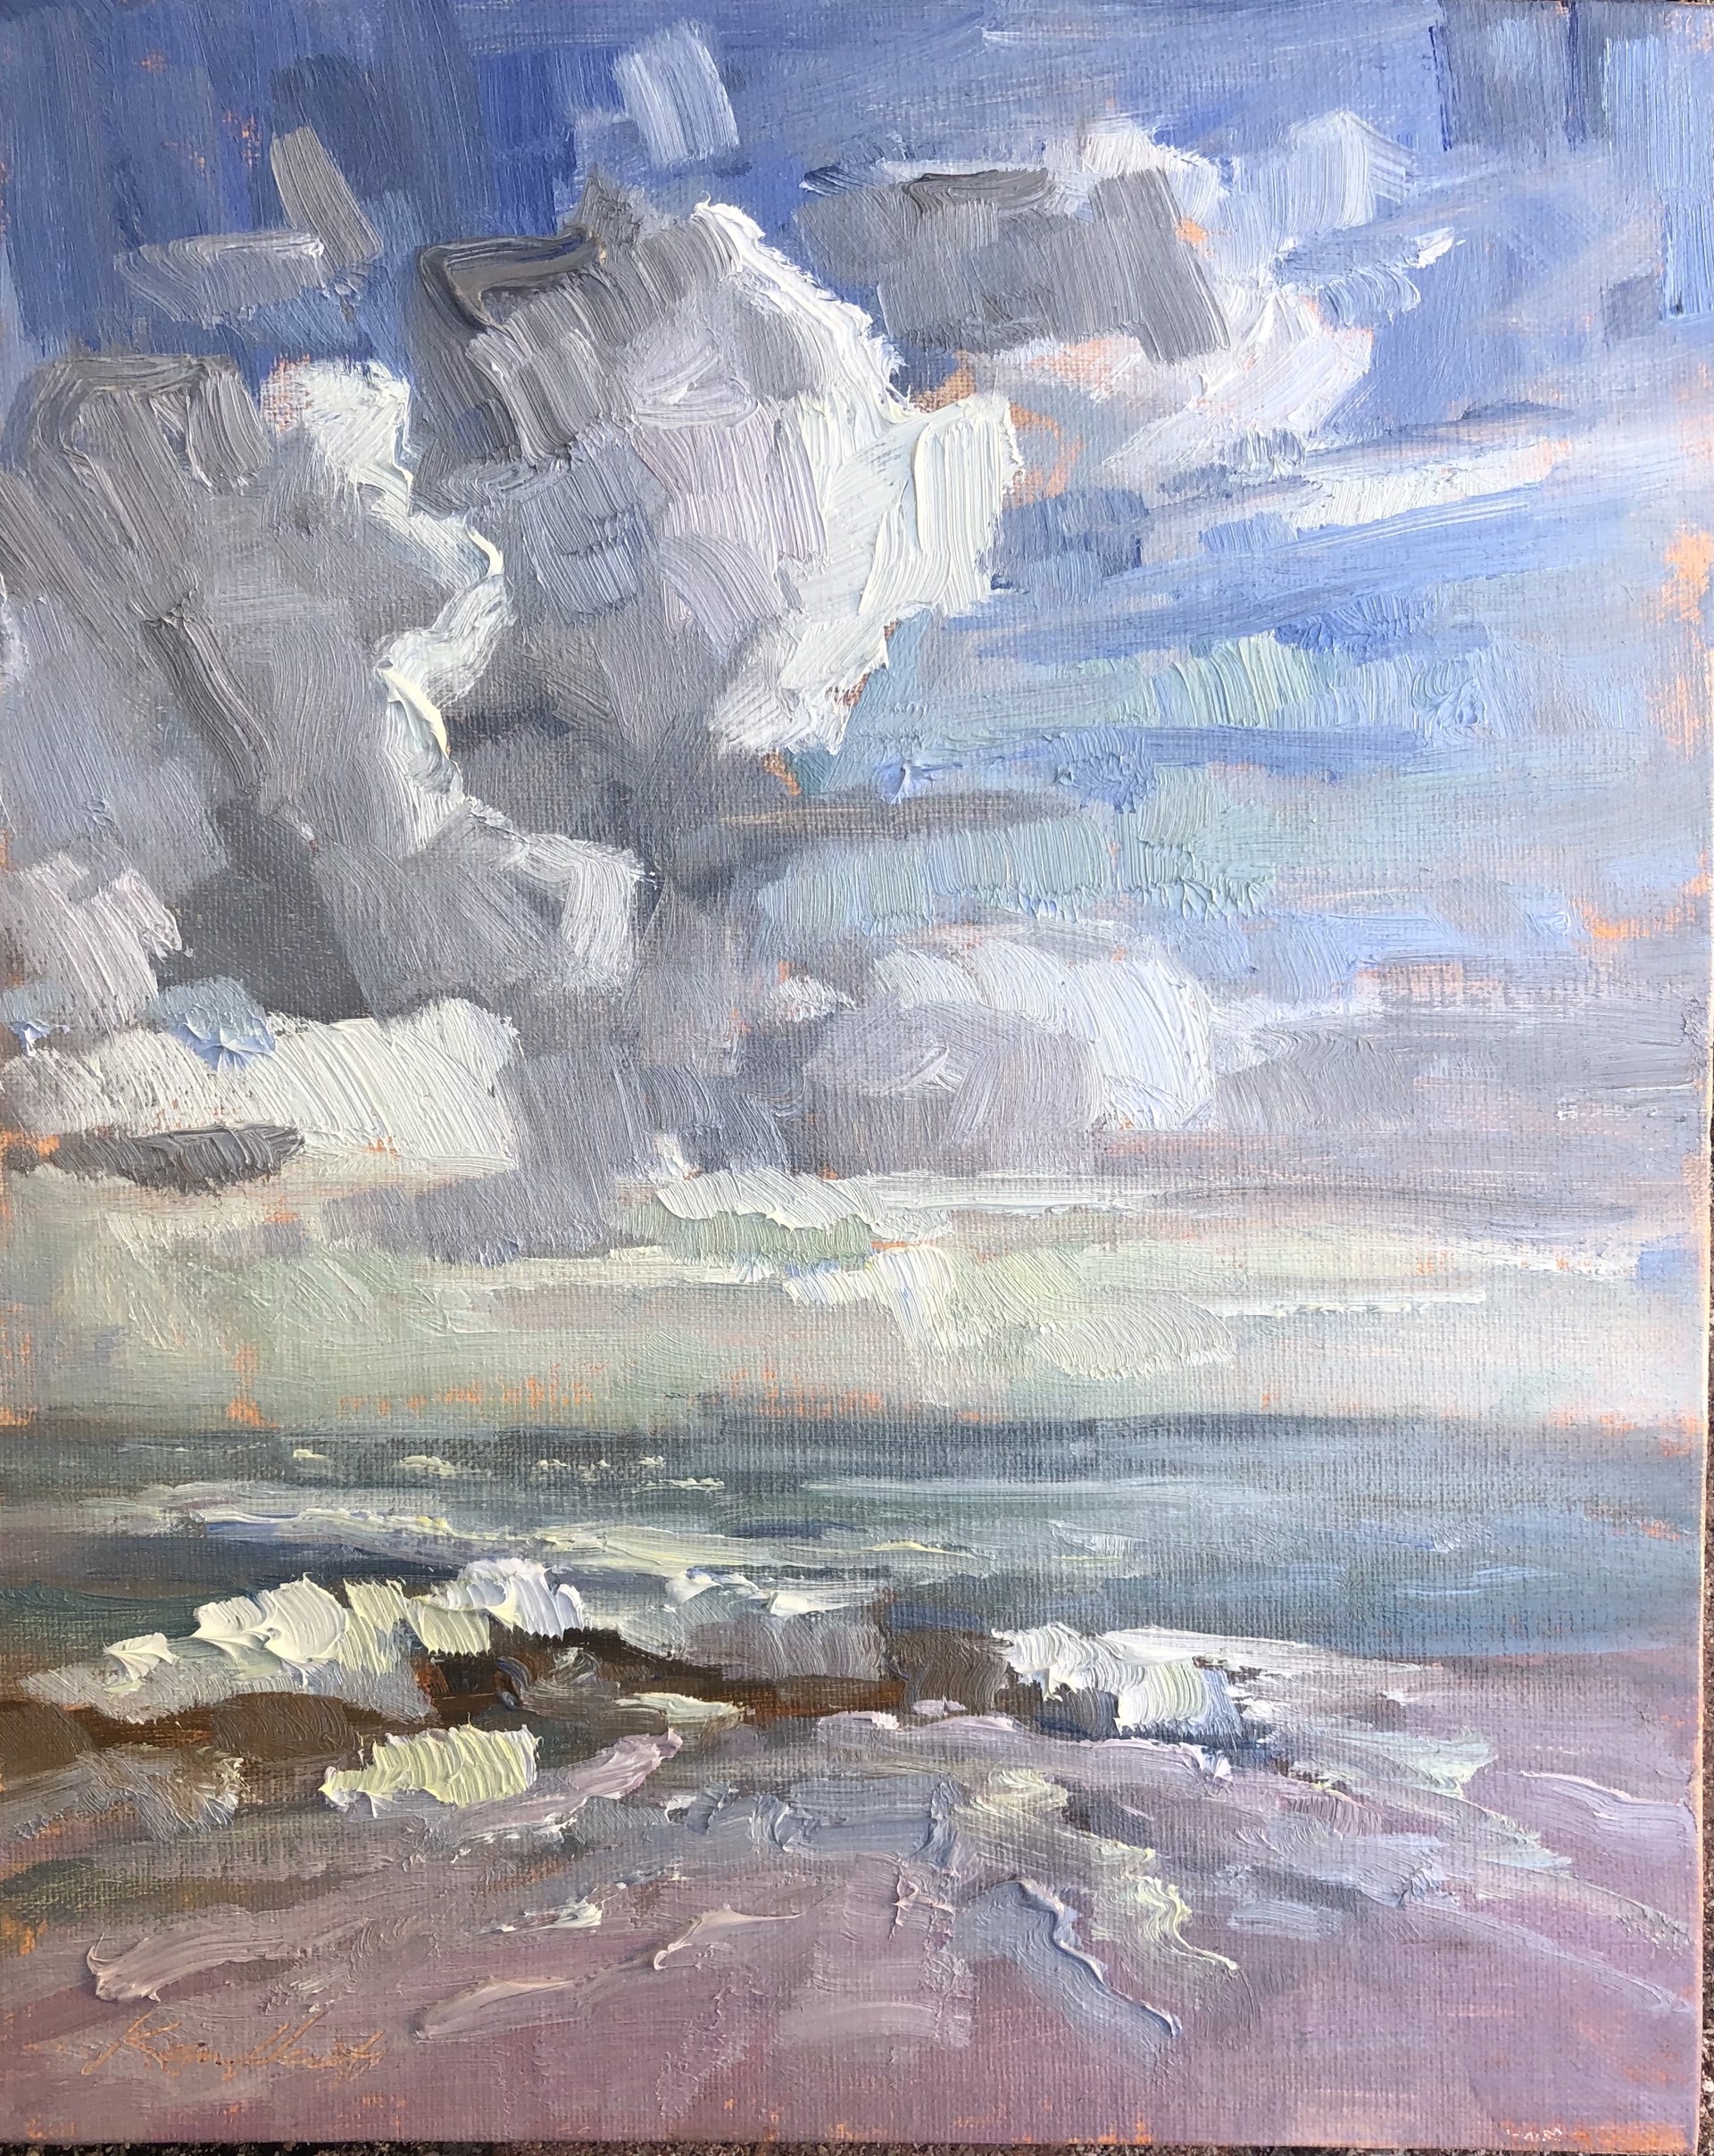 Gathering Clouds at the Seashore by Karen Hewitt Hagan